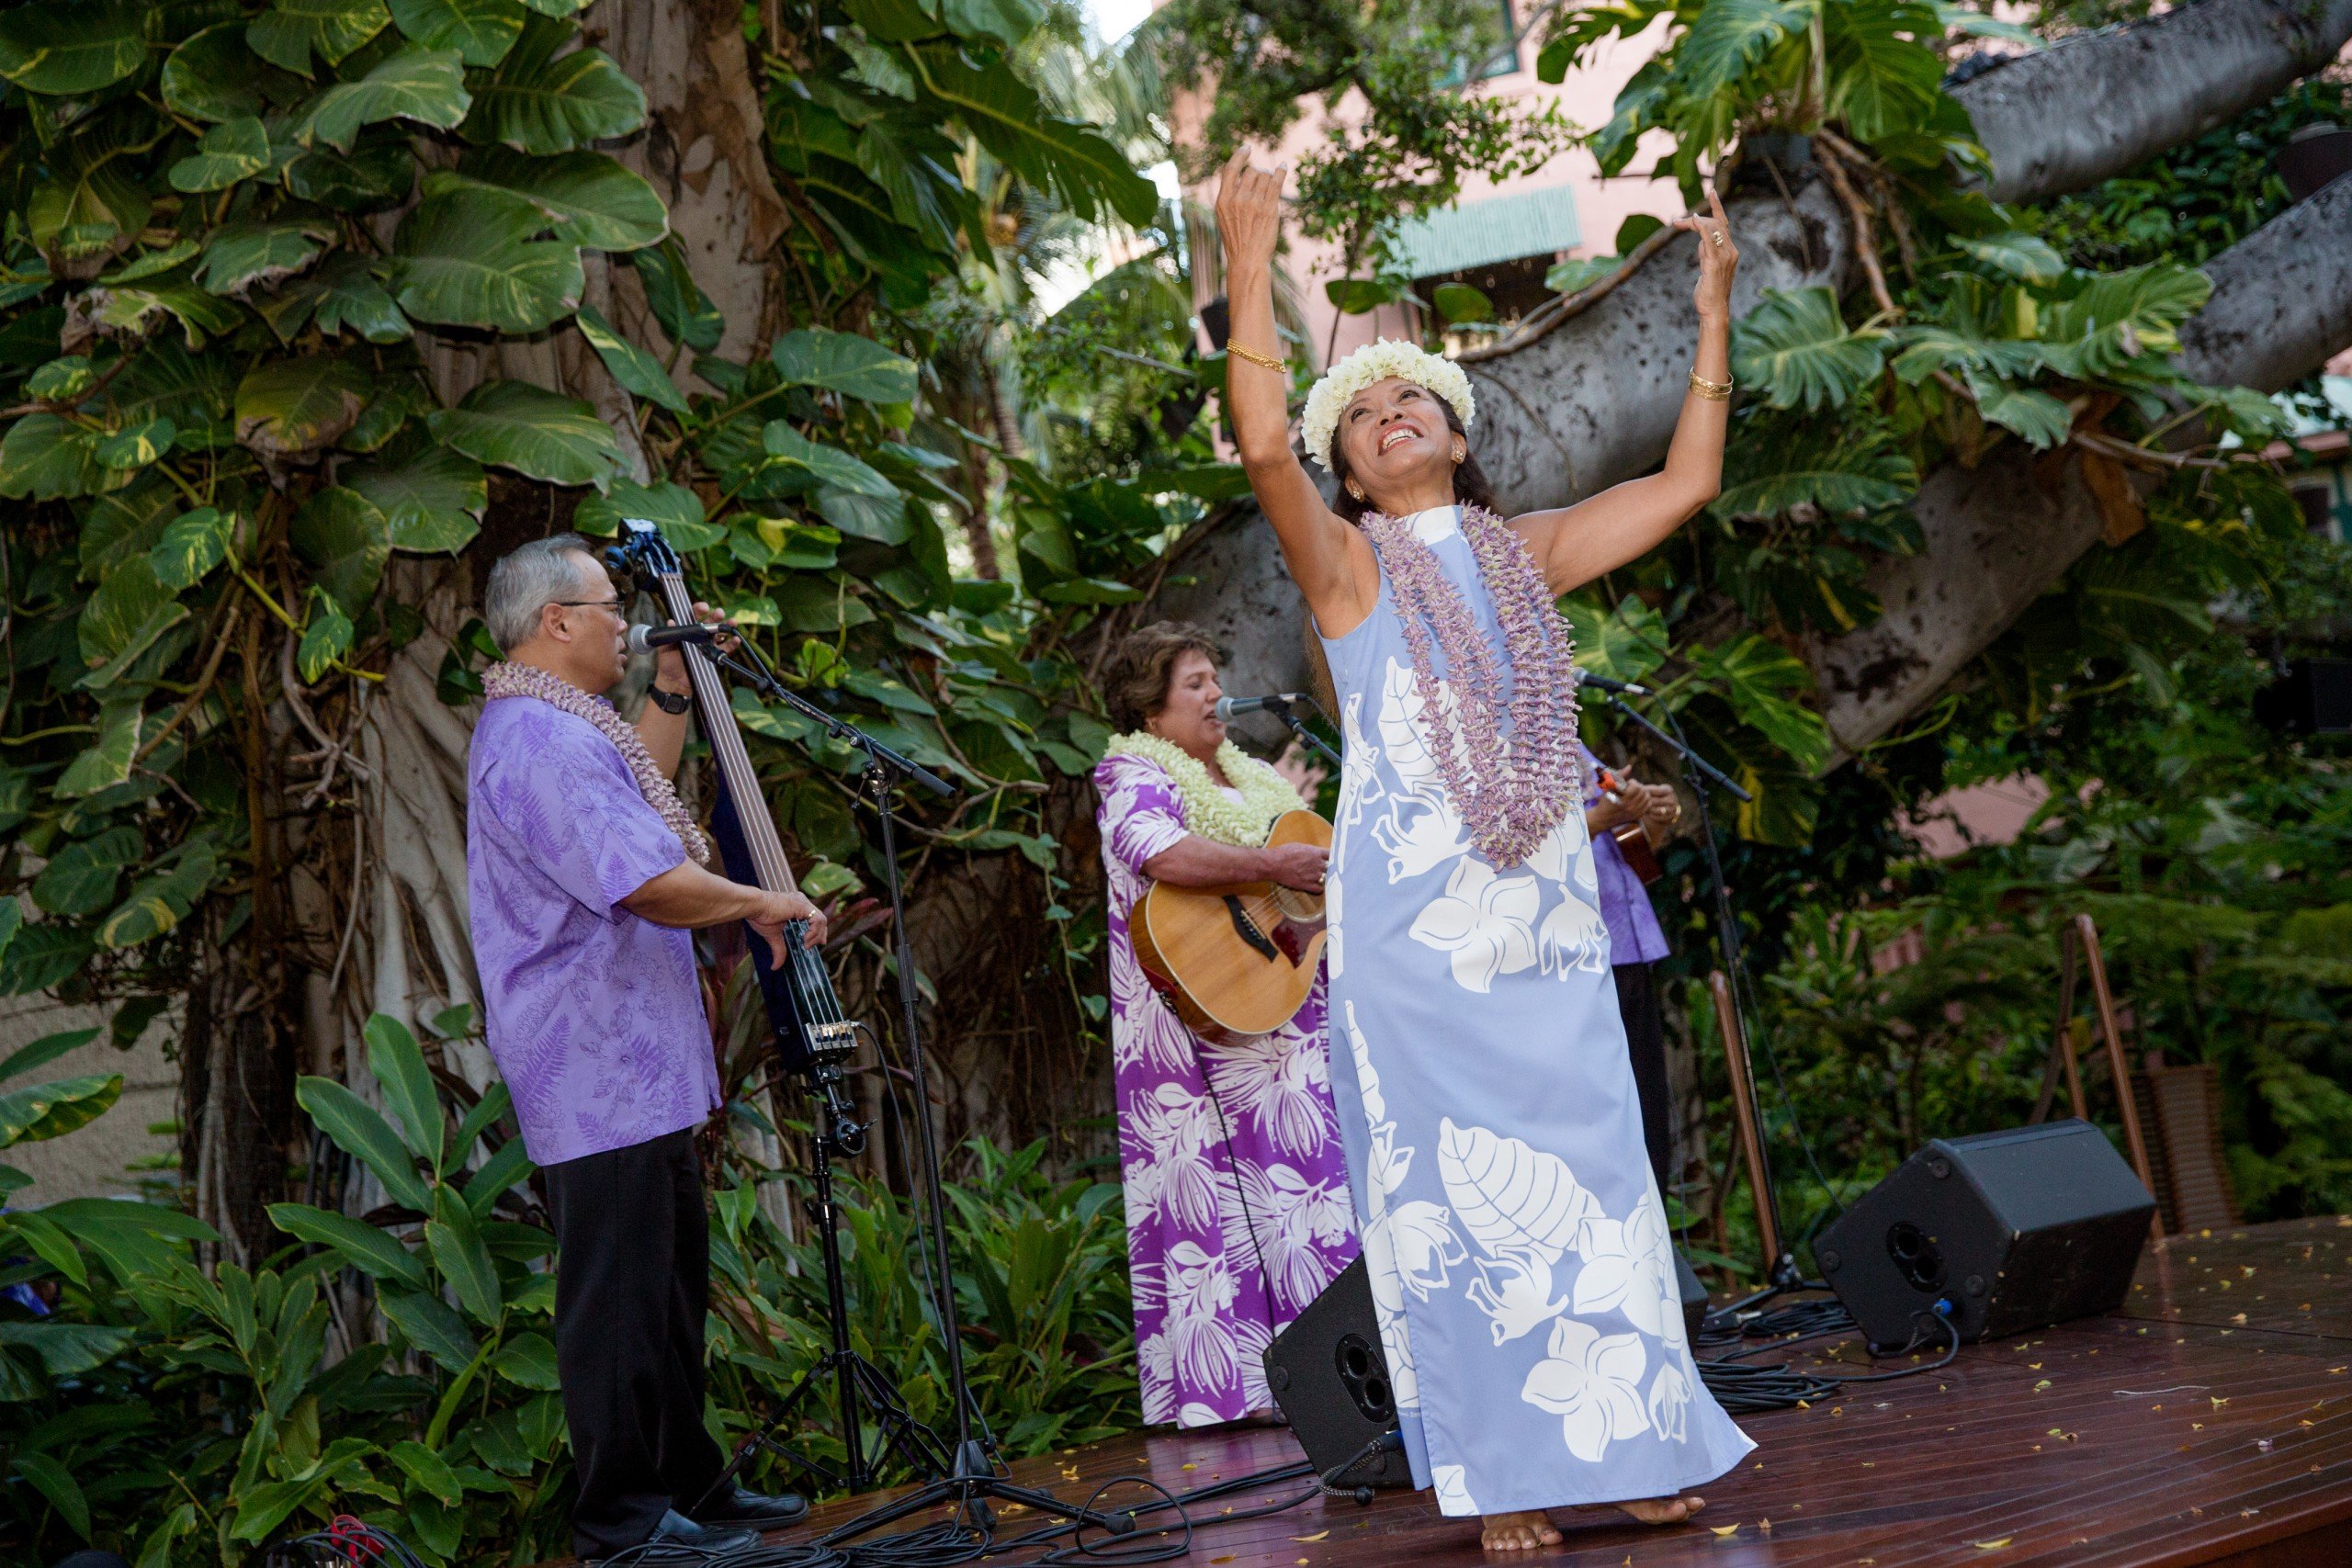 Cultural Entertainment Returns to Royal Hawaiian Center